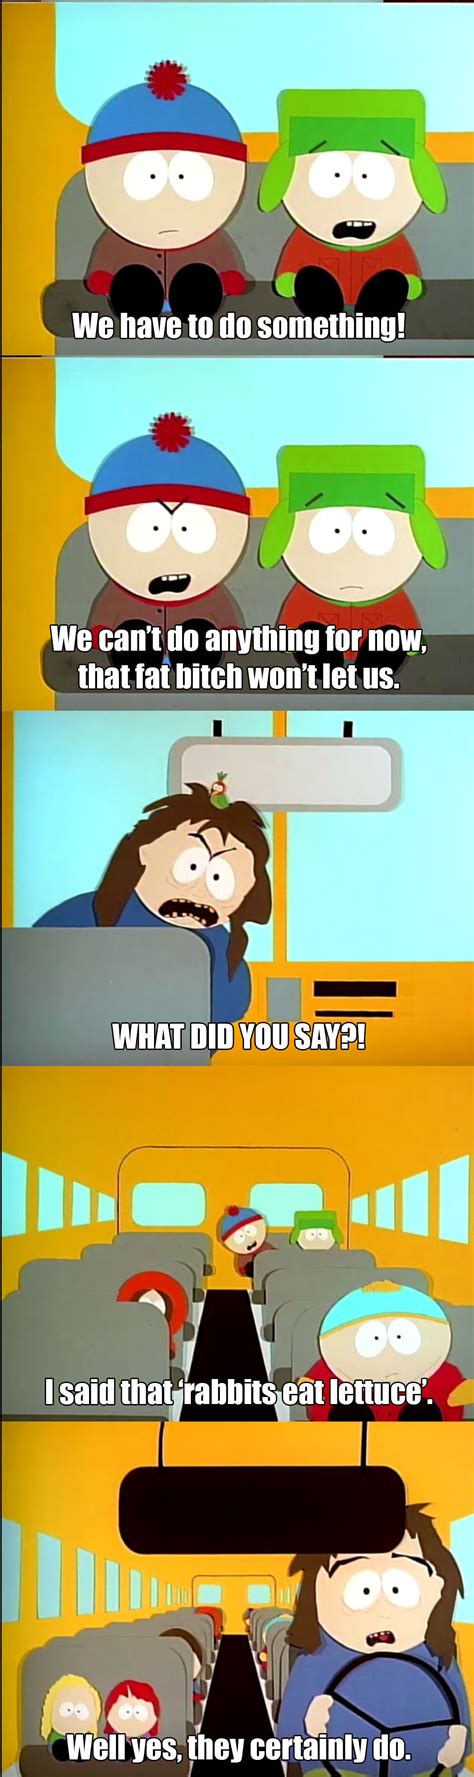 South Park Memes Images South Park Memes Best Collection Of Funny South Park Pictures Feh